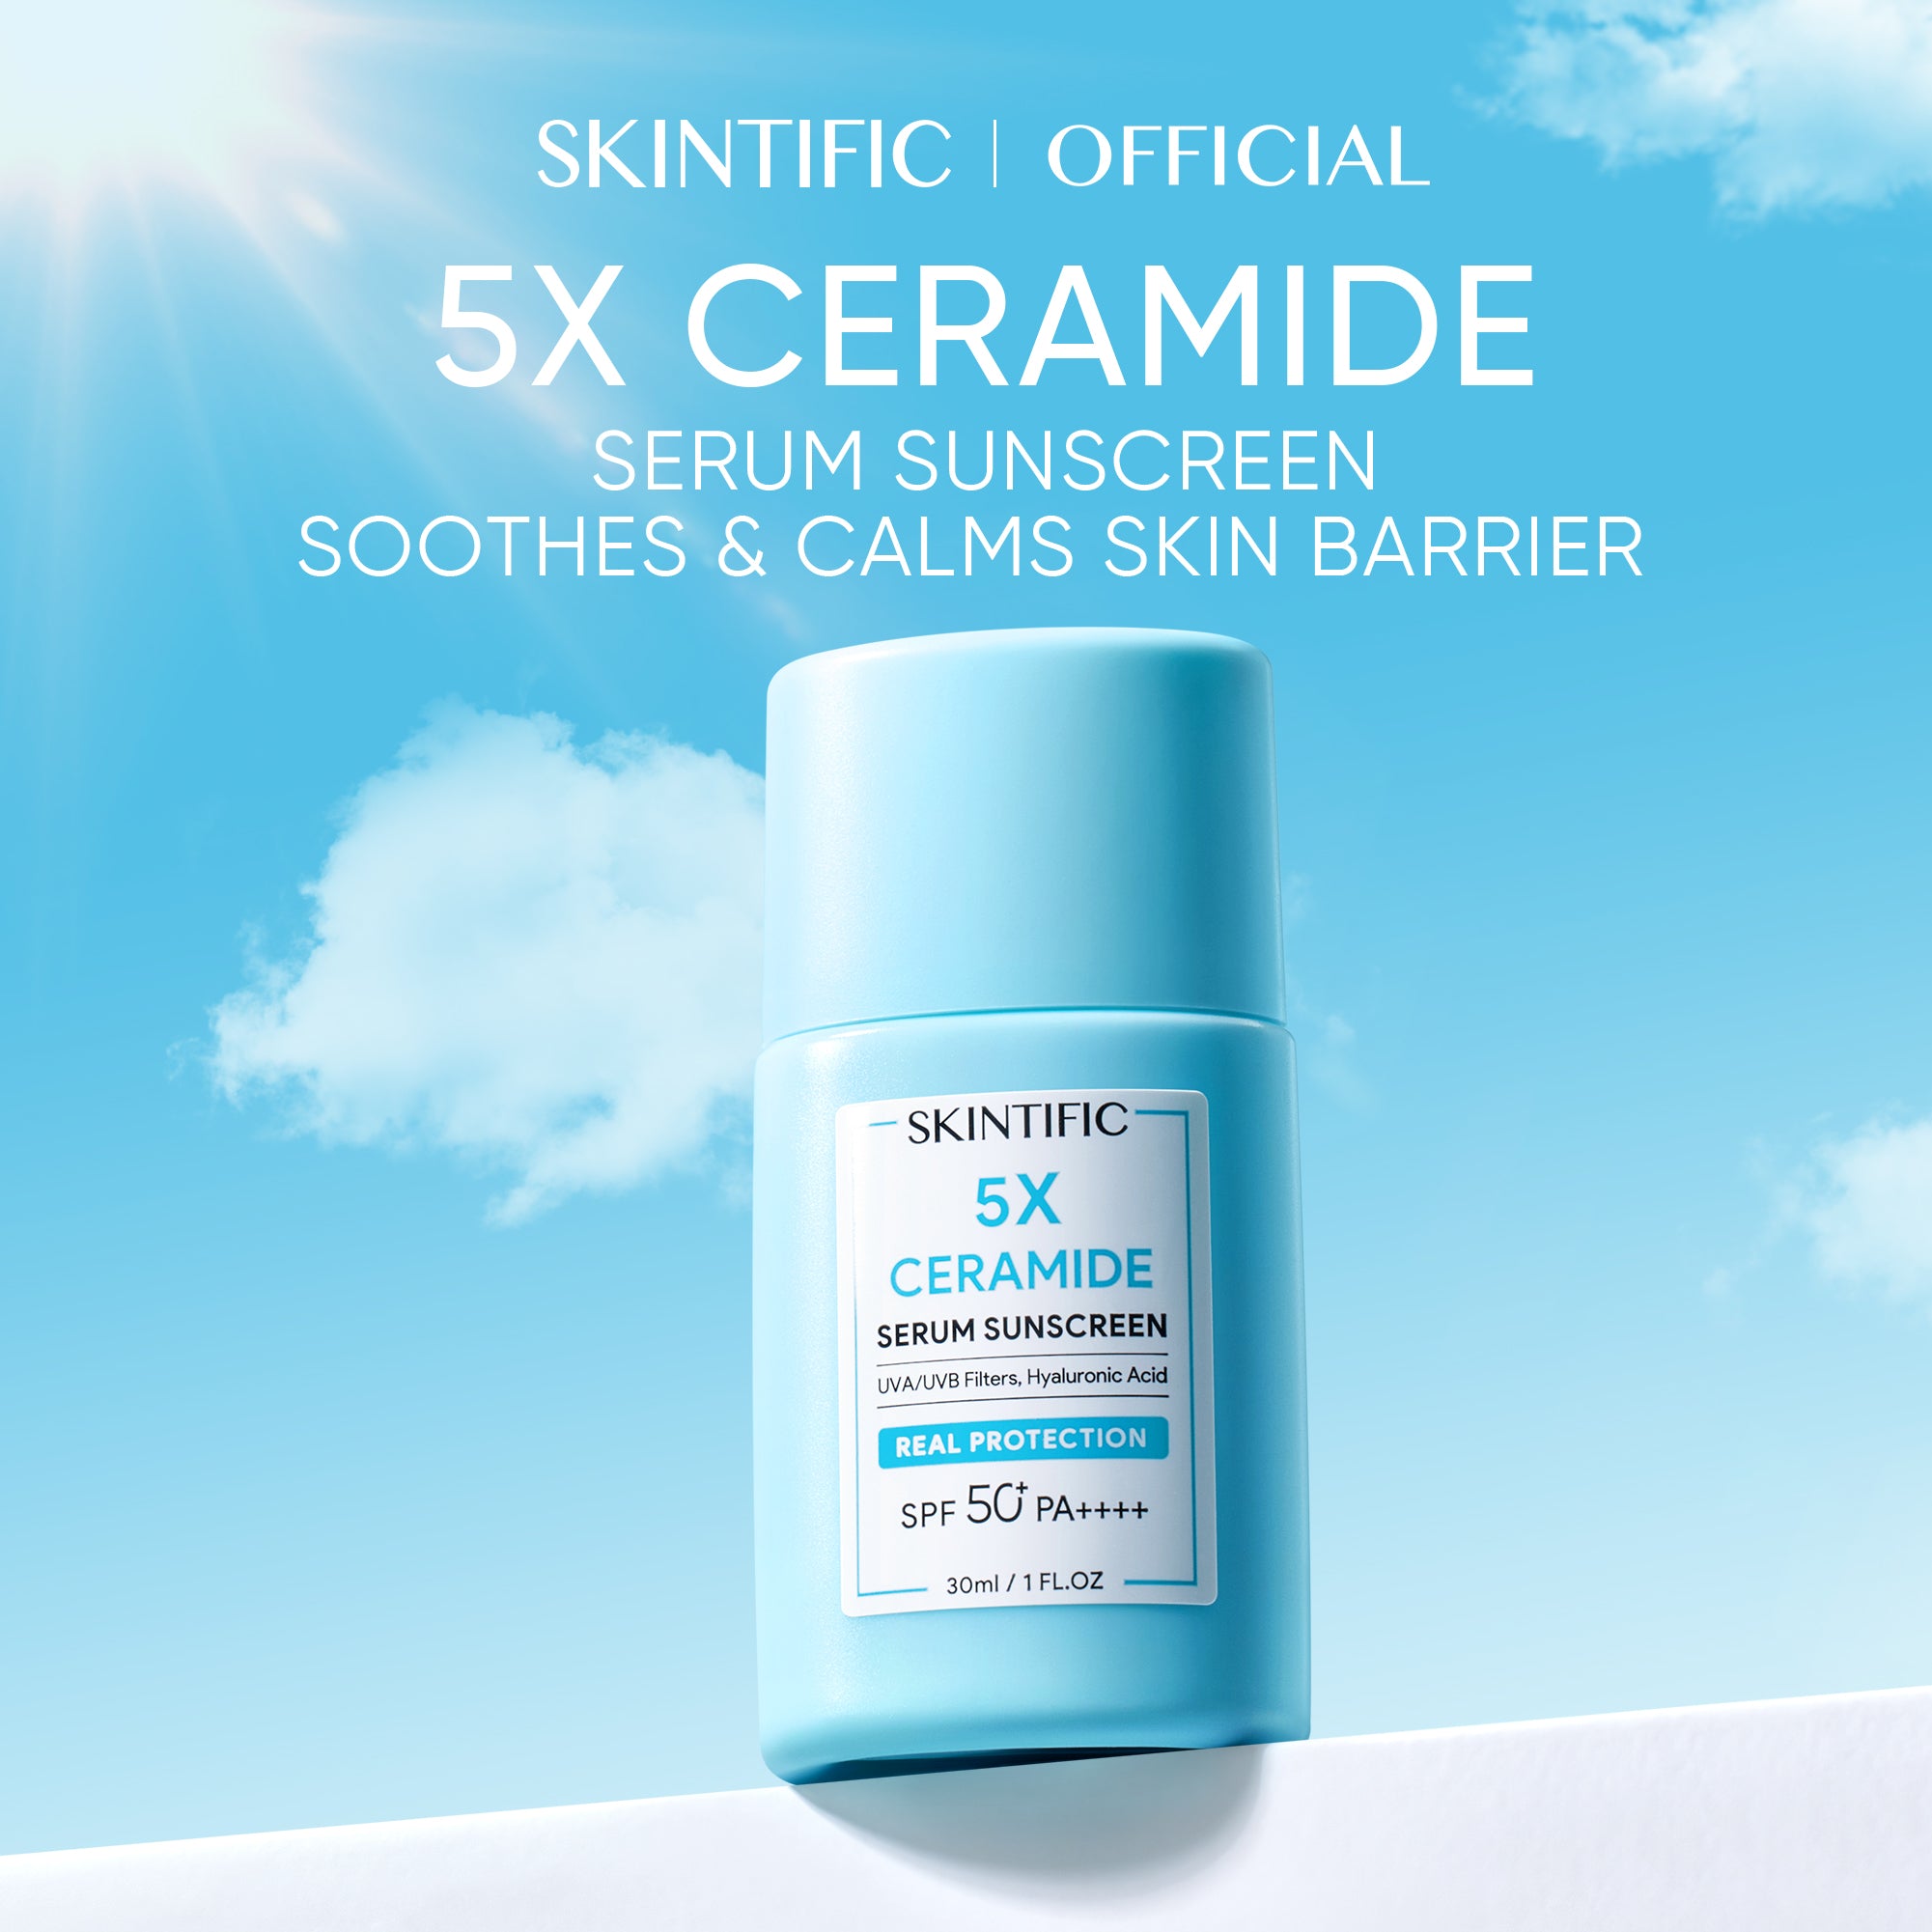 5X Ceramide Serum Sunscreen SPF50 PA++++